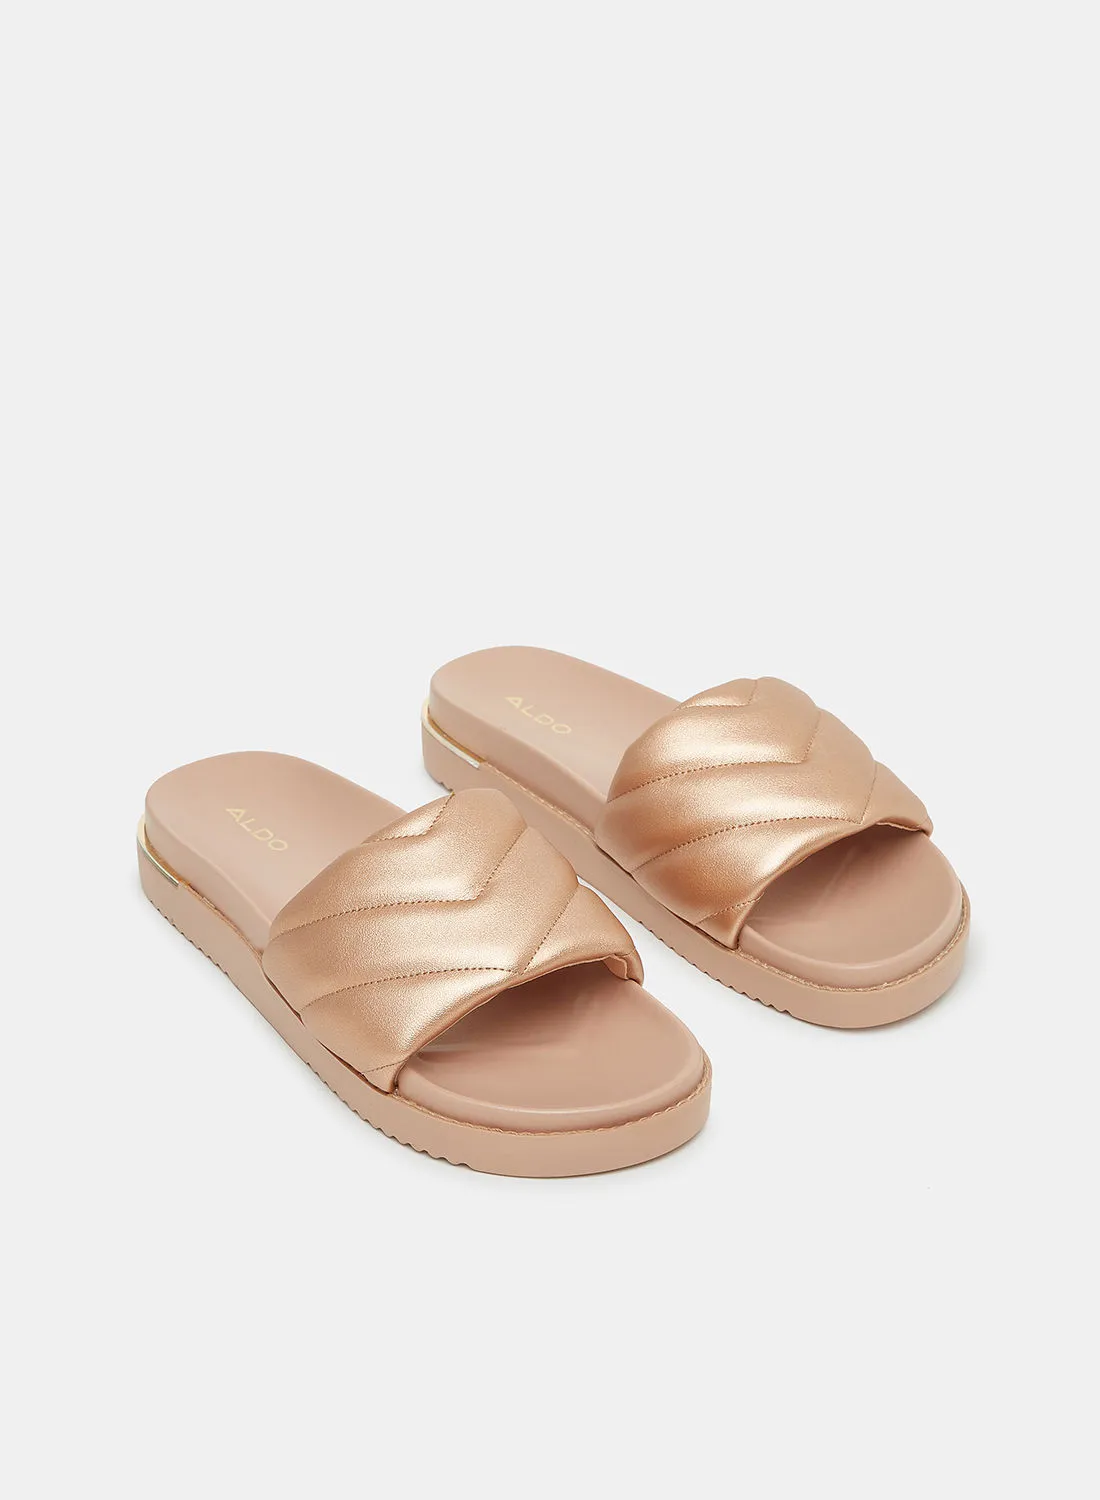 ALDO Acaswen Flat Sandals